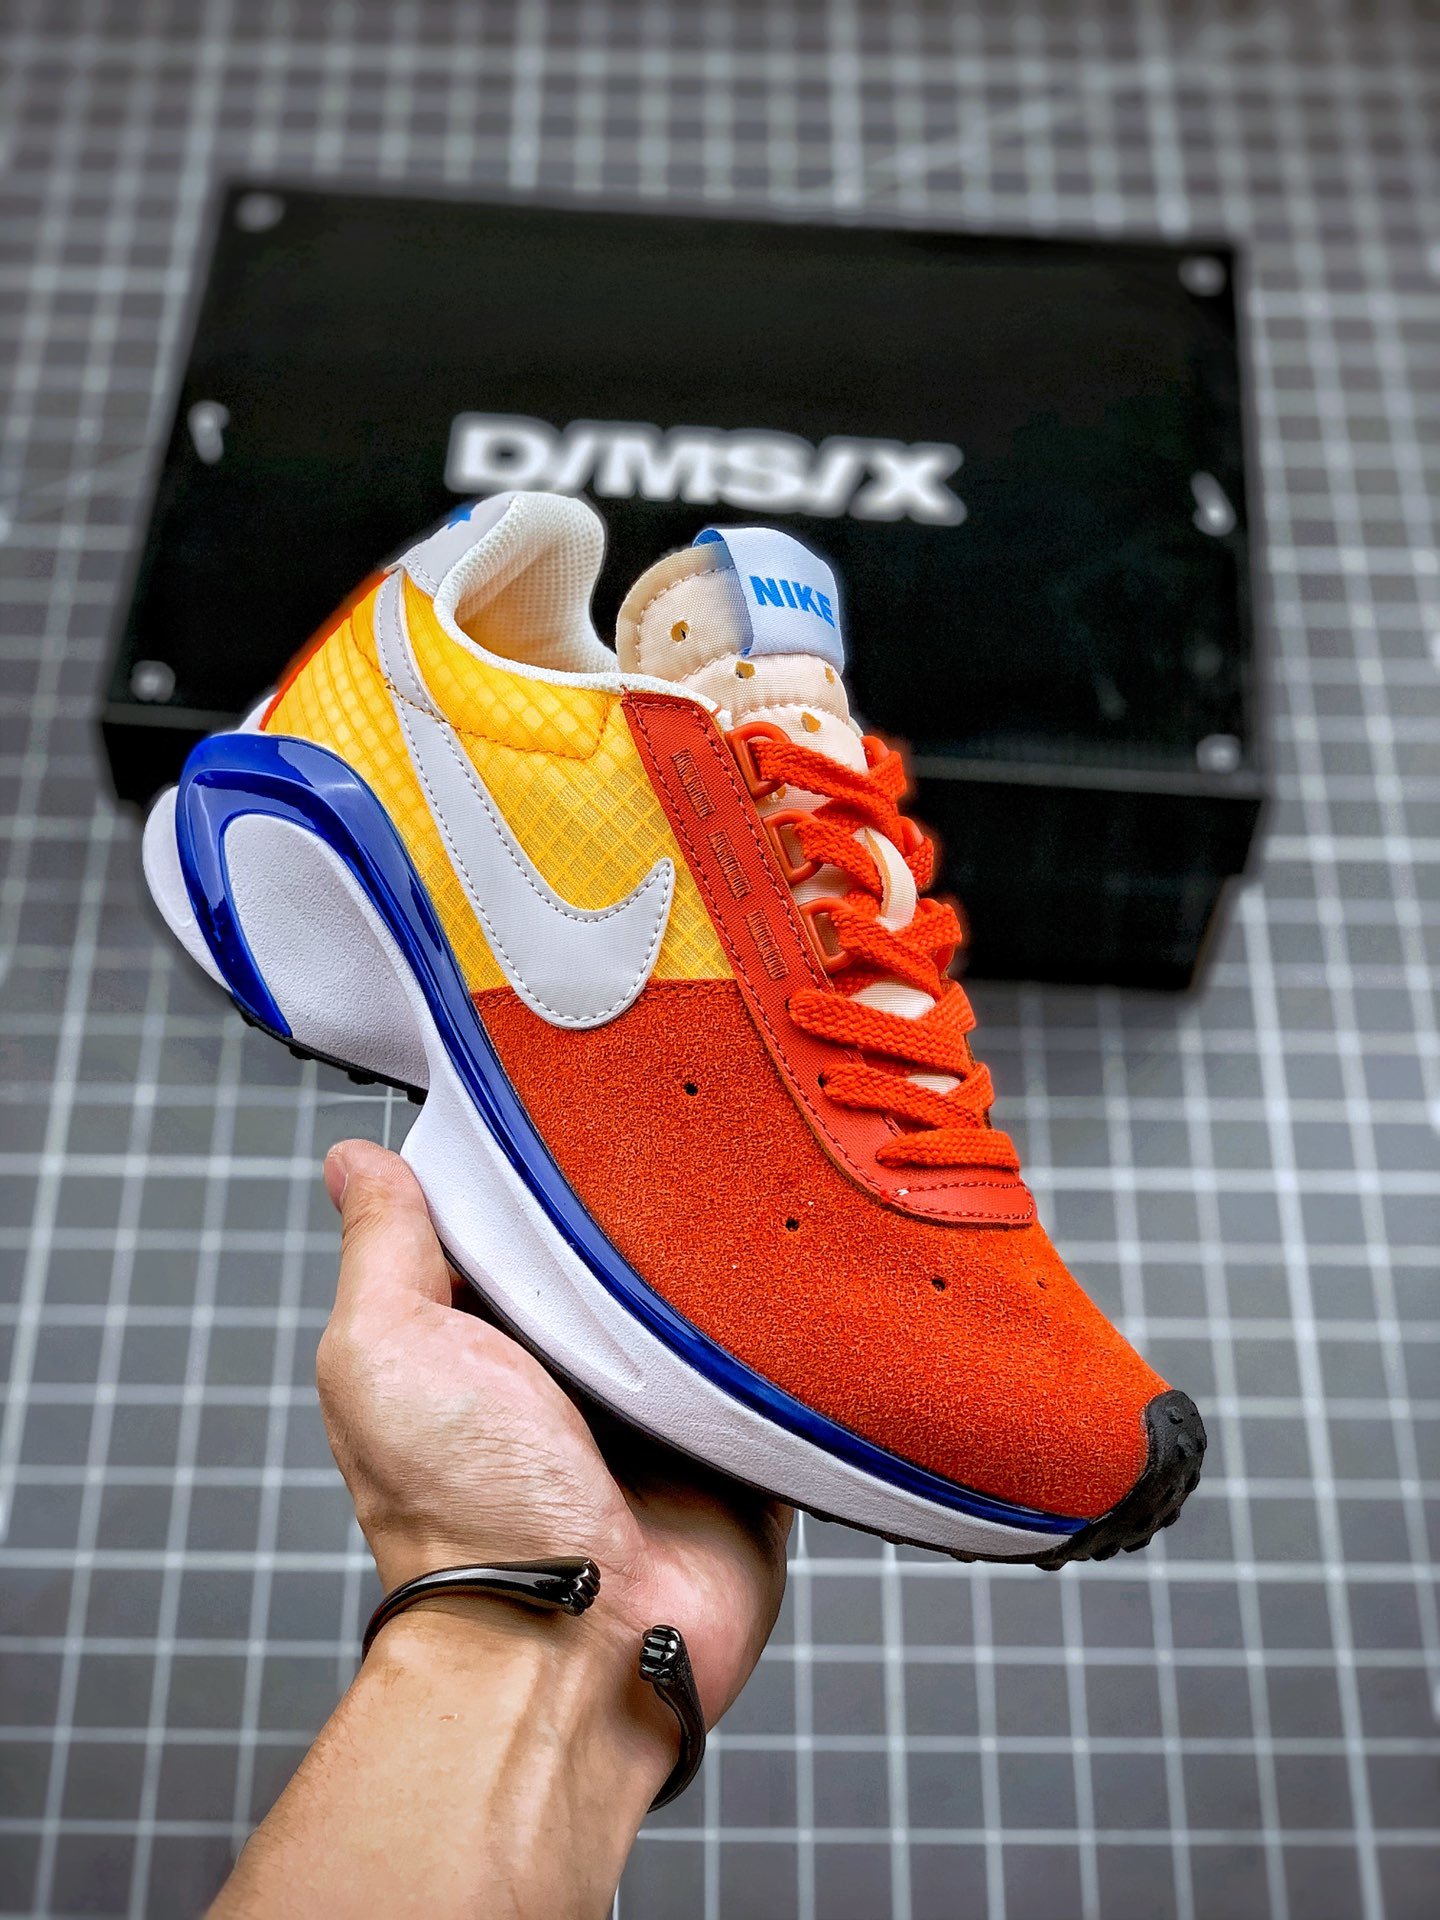 Nike D/MS/X Waffle Orange Yellow Blue Shoes